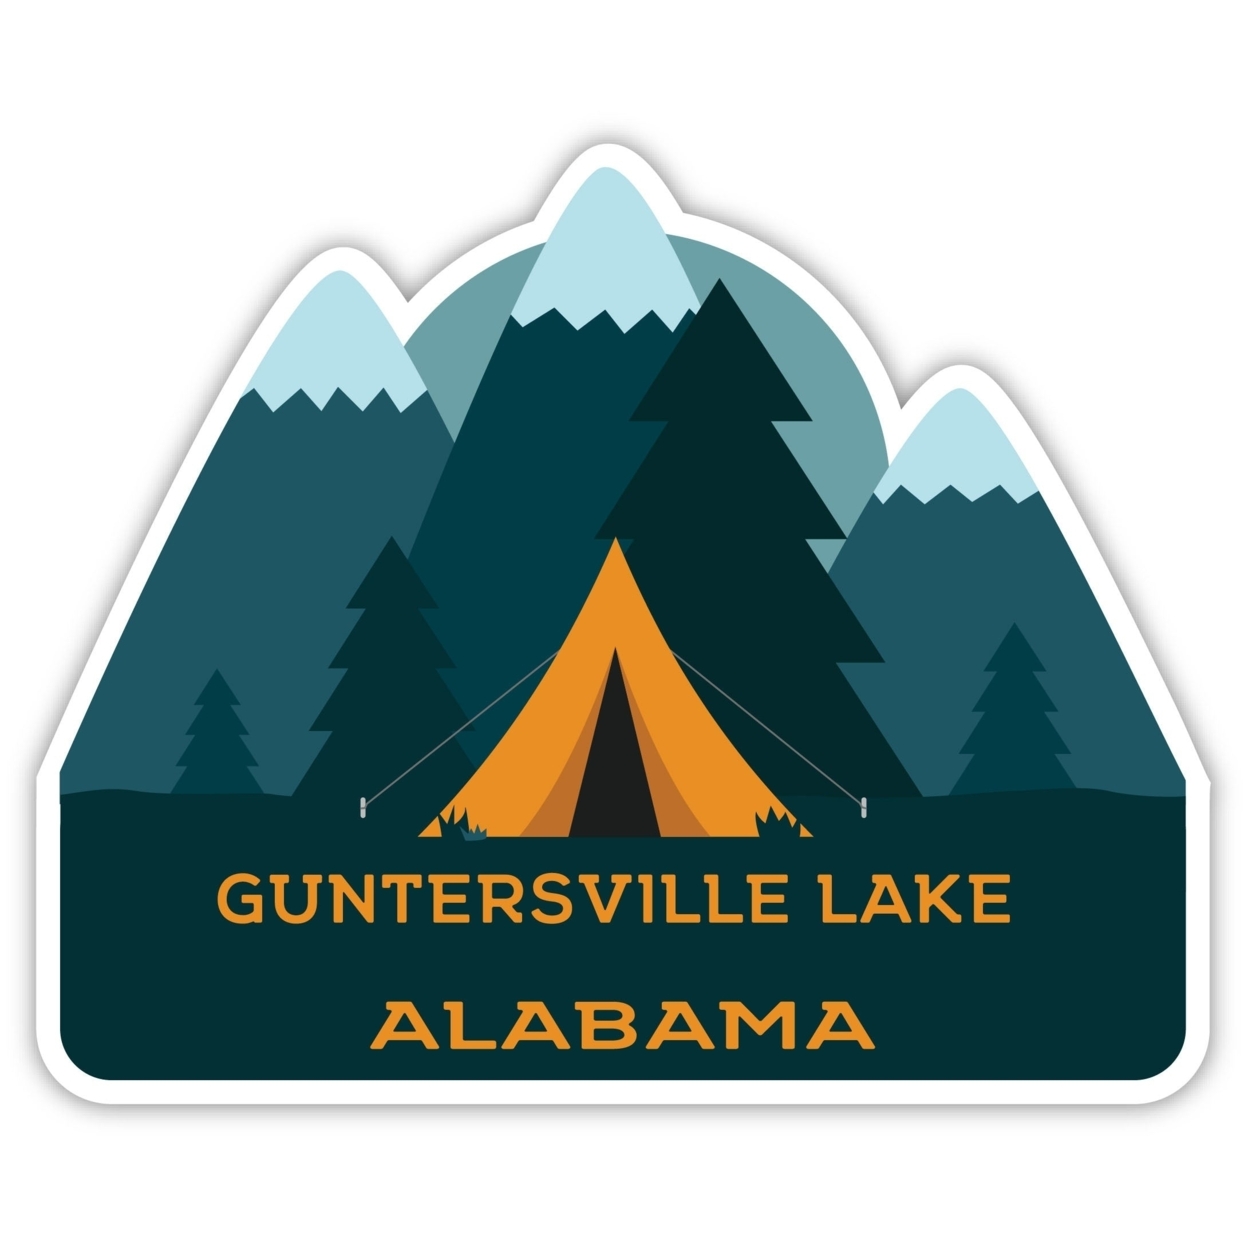 Guntersville Lake Alabama Souvenir Decorative Stickers (Choose Theme And Size) - 4-Pack, 4-Inch, Tent